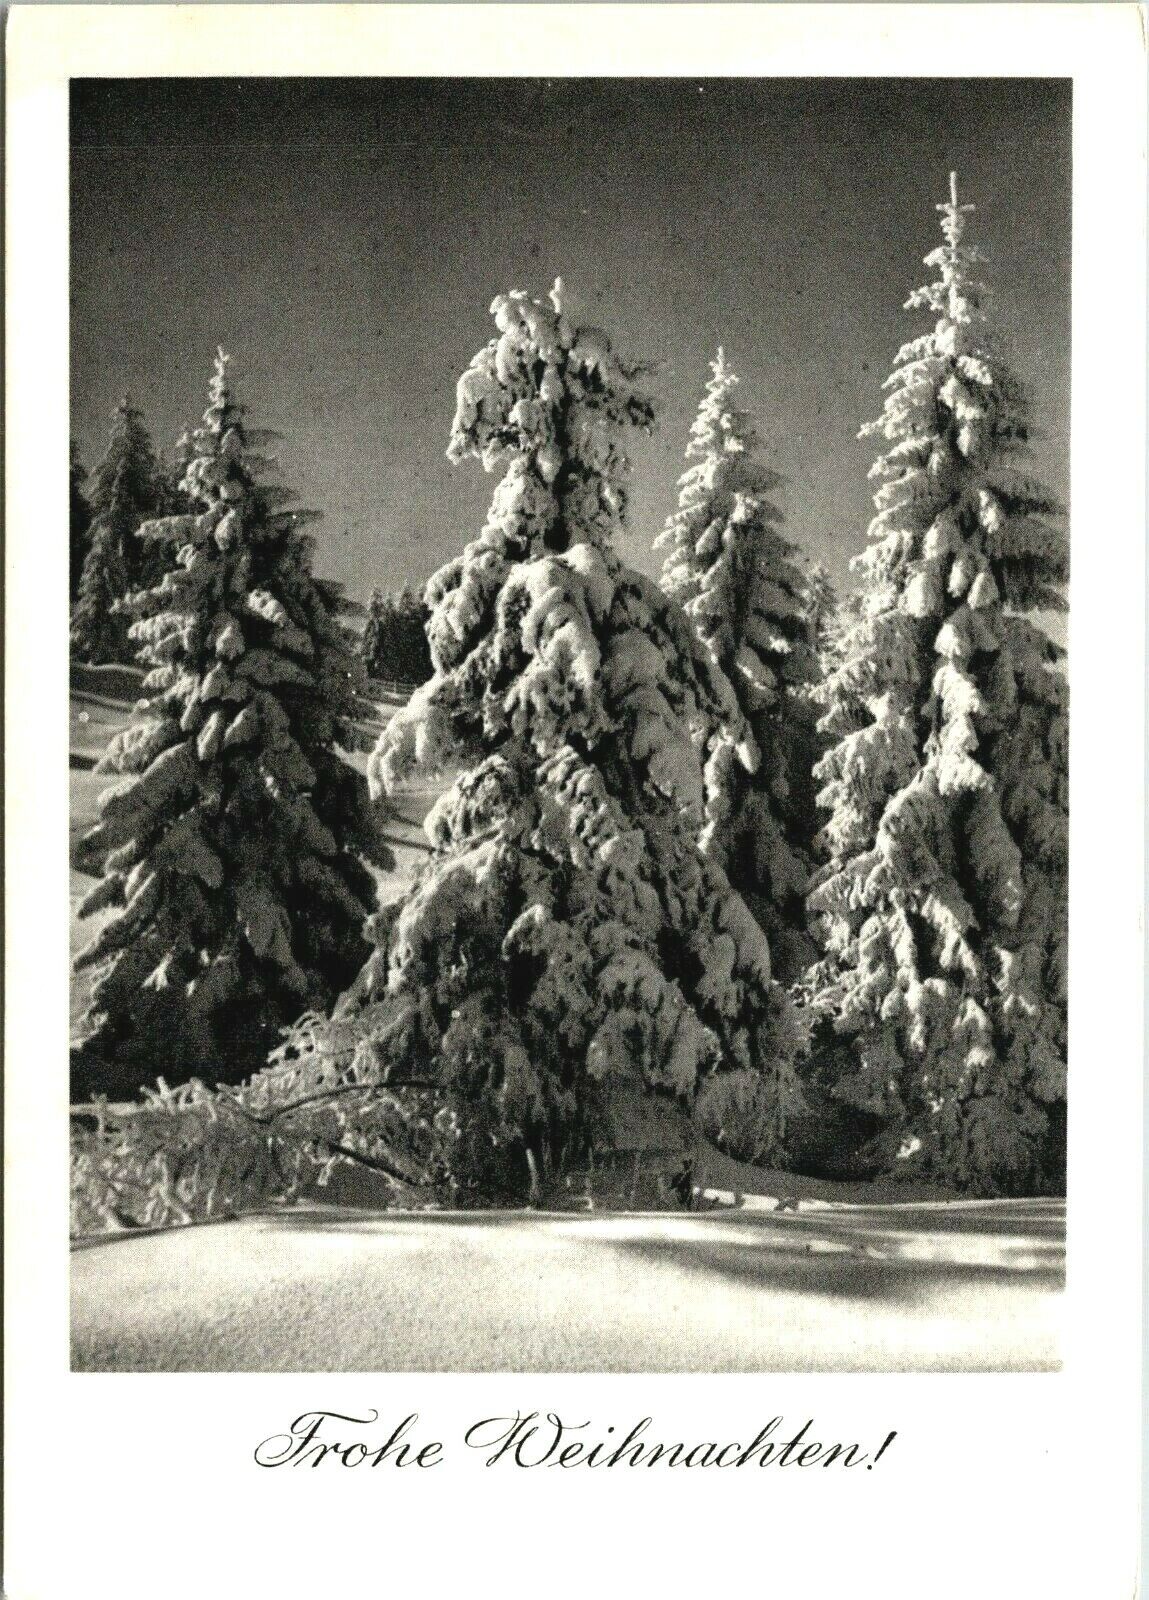 Vtg German Postcard Frohe Weihnachten (Happy Christmas) trees snow 